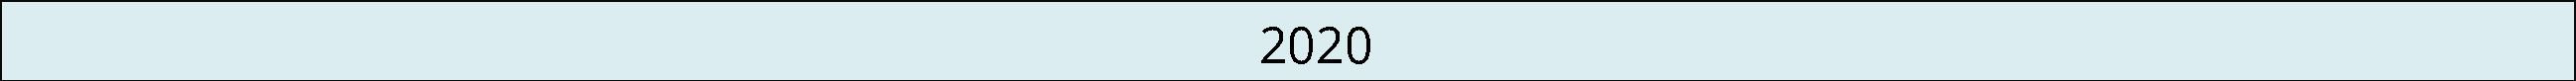 2020. Figur